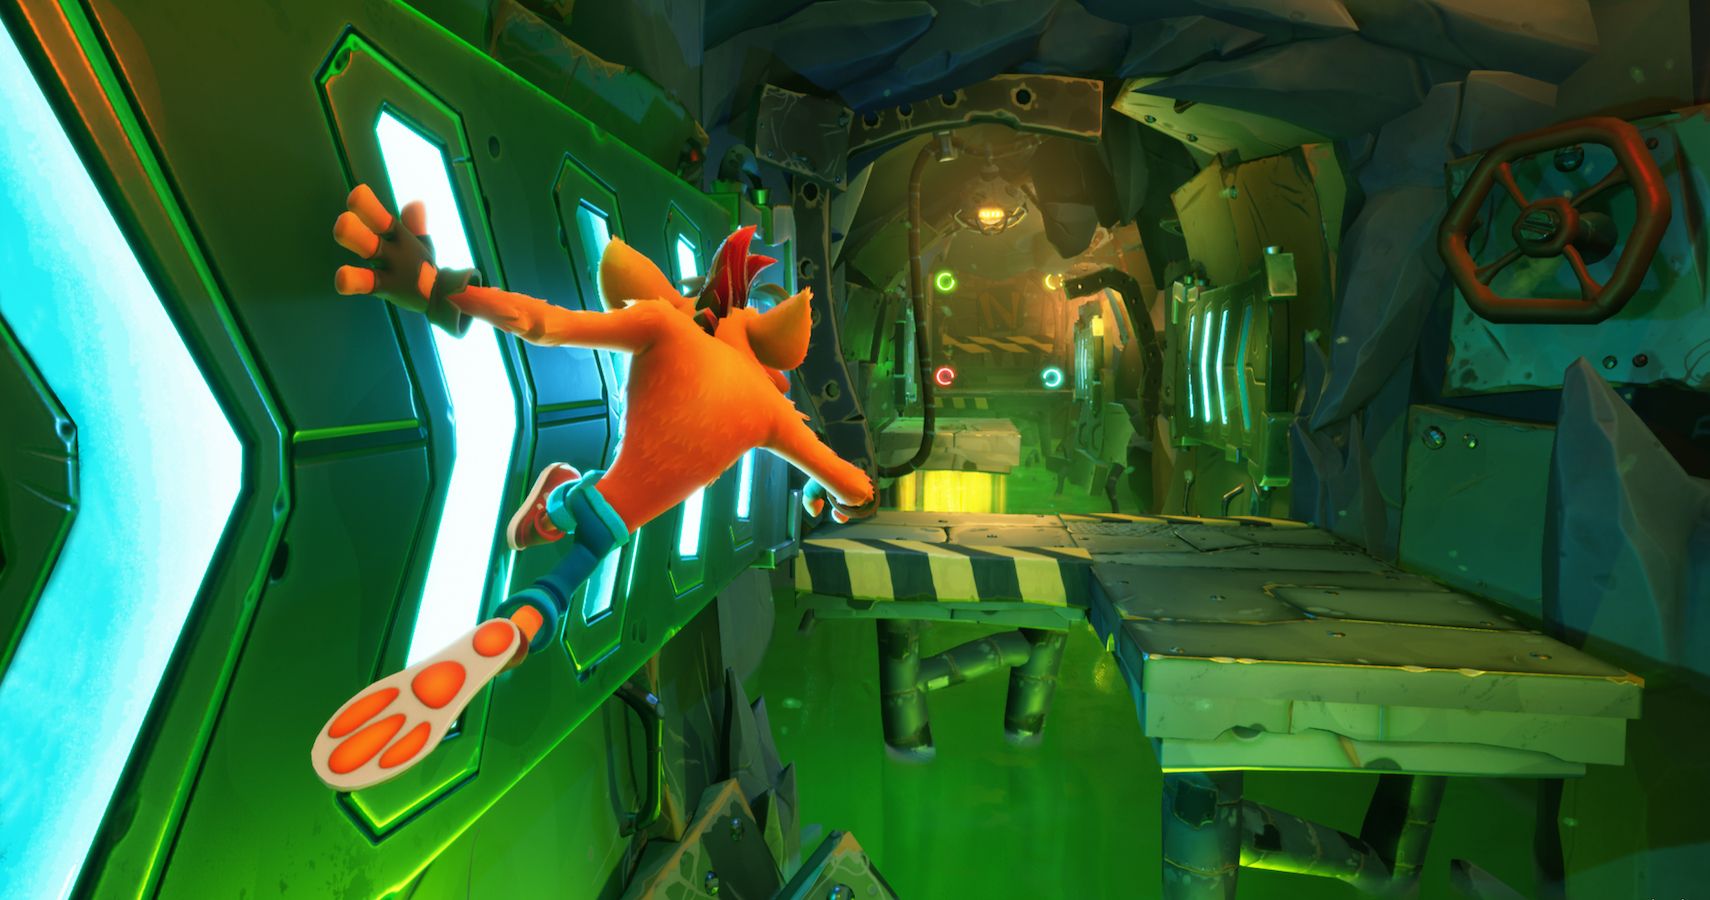 Announcement: Crash Bandicoot Customization Revealed!